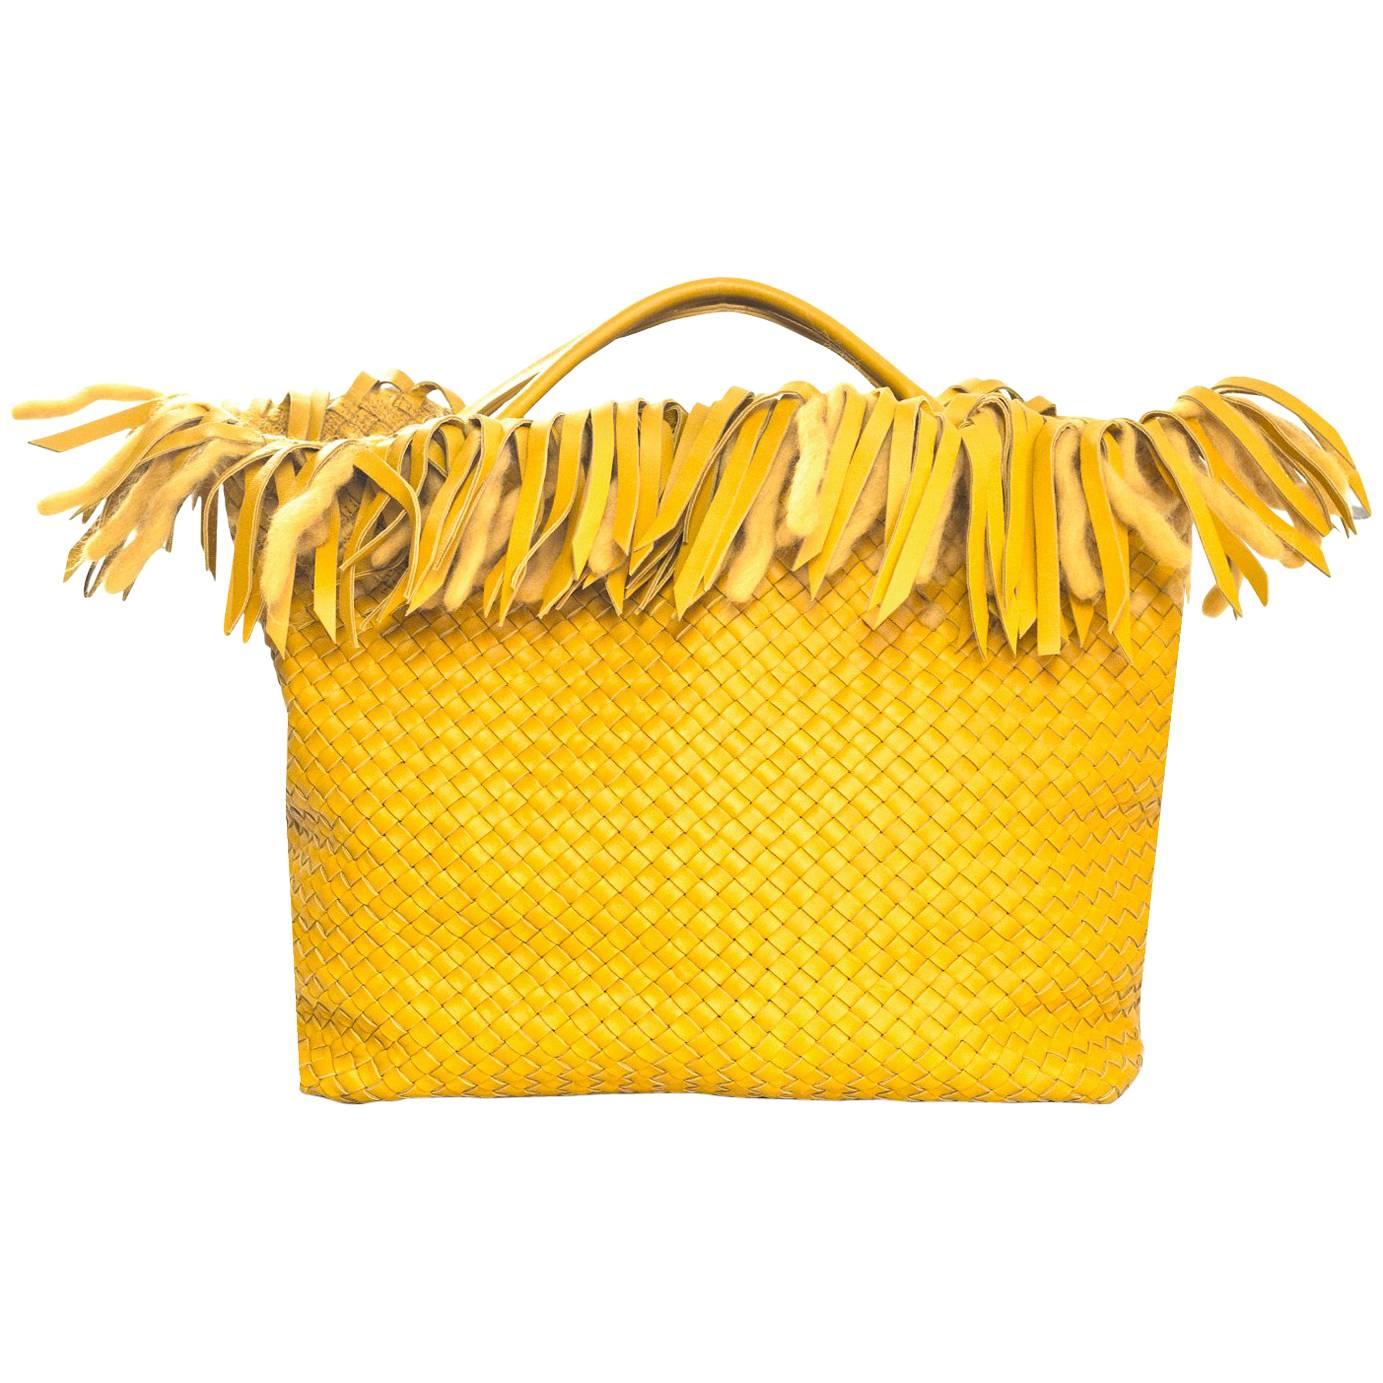 Bottega Veneta Mustard Leather & Wool Limited Ed Intrecciato Tote Bag